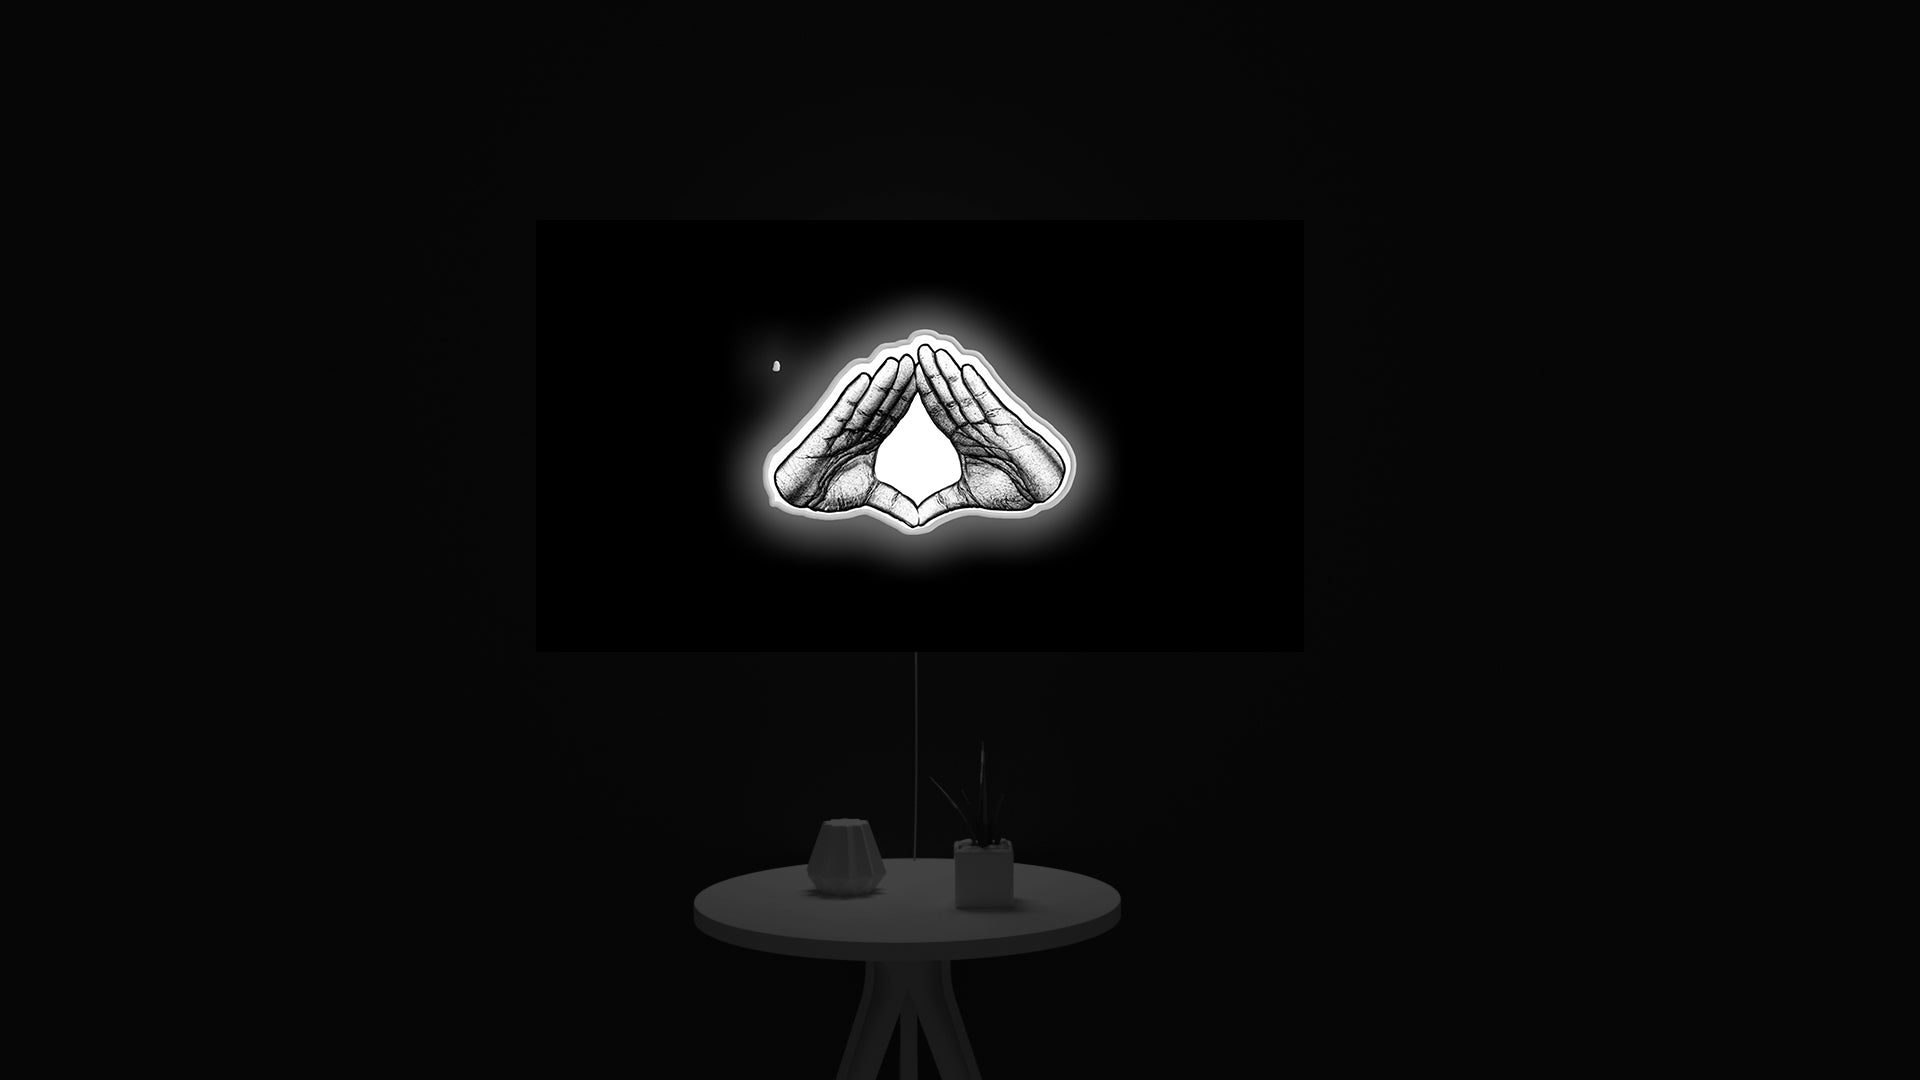 Illuminati led light sign